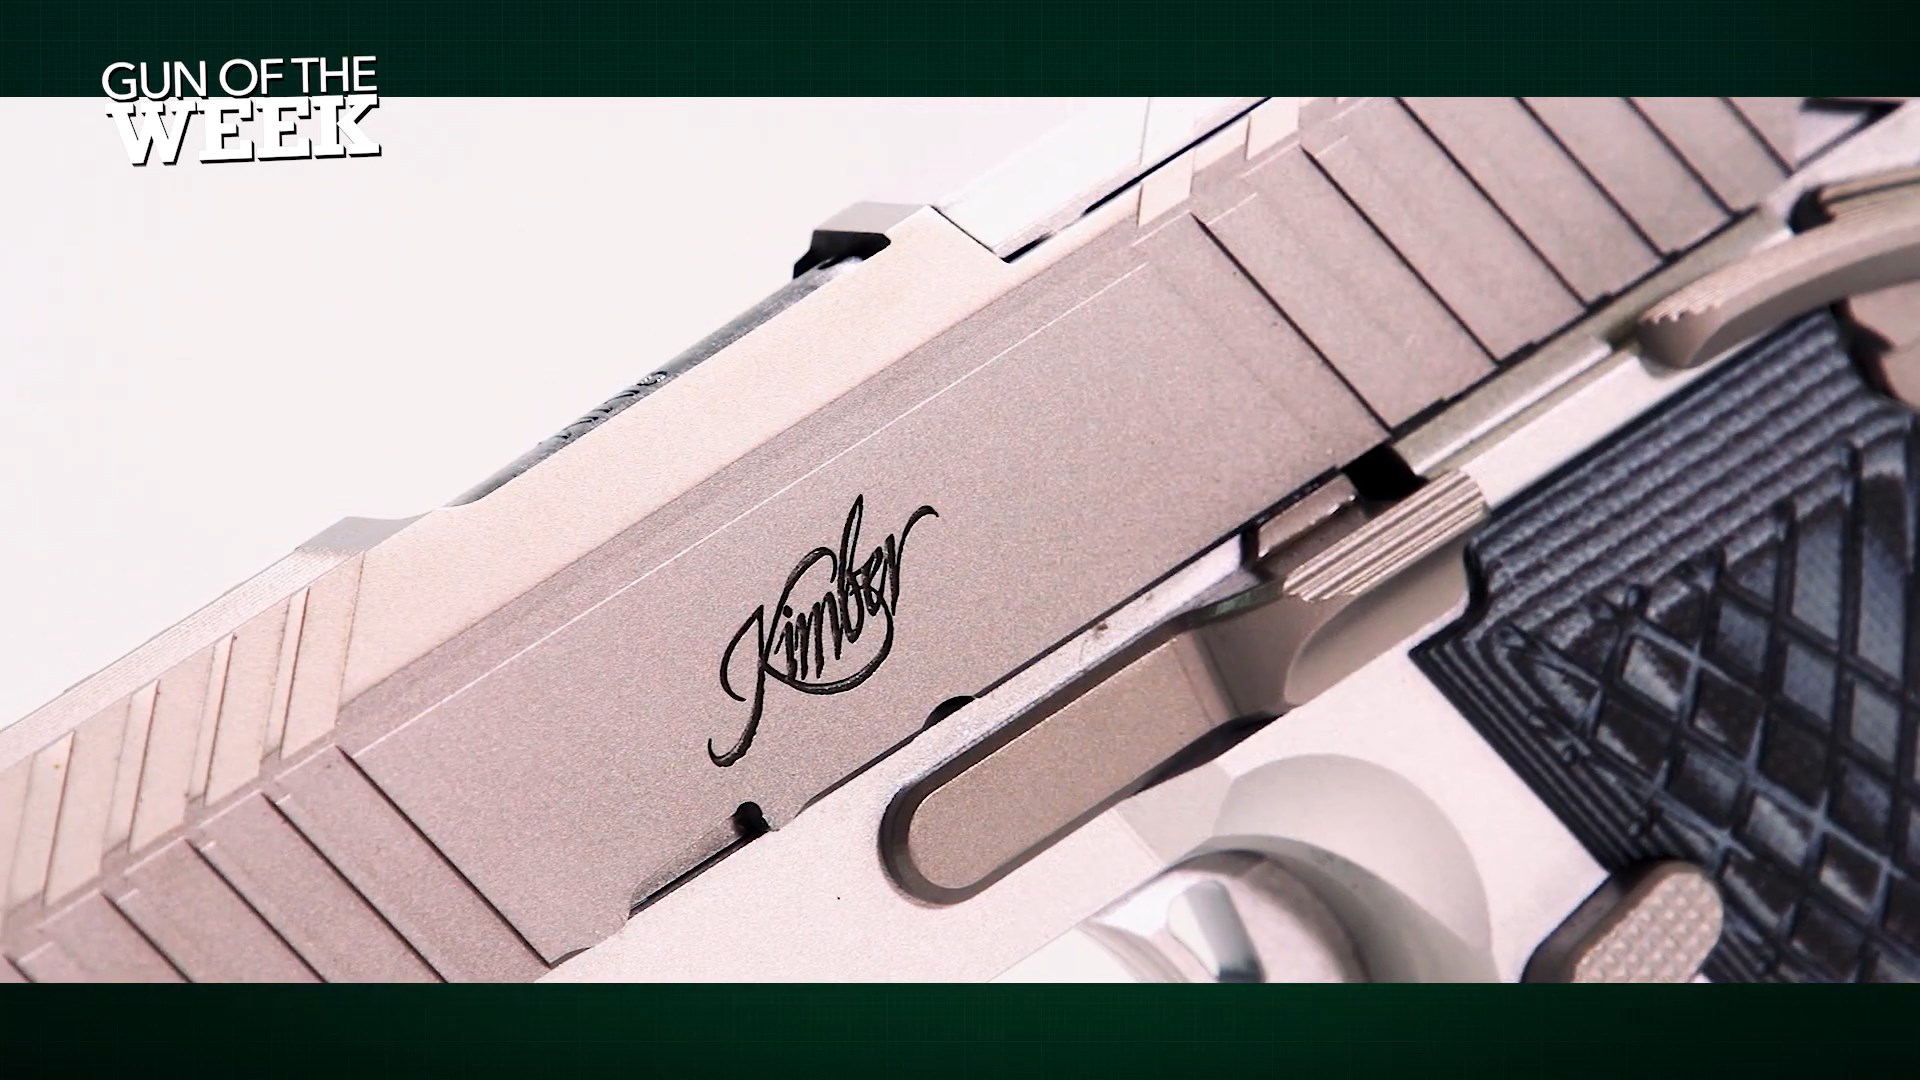 Kmber KDS9c pistol 9 mm stainless steel company logo central engraving